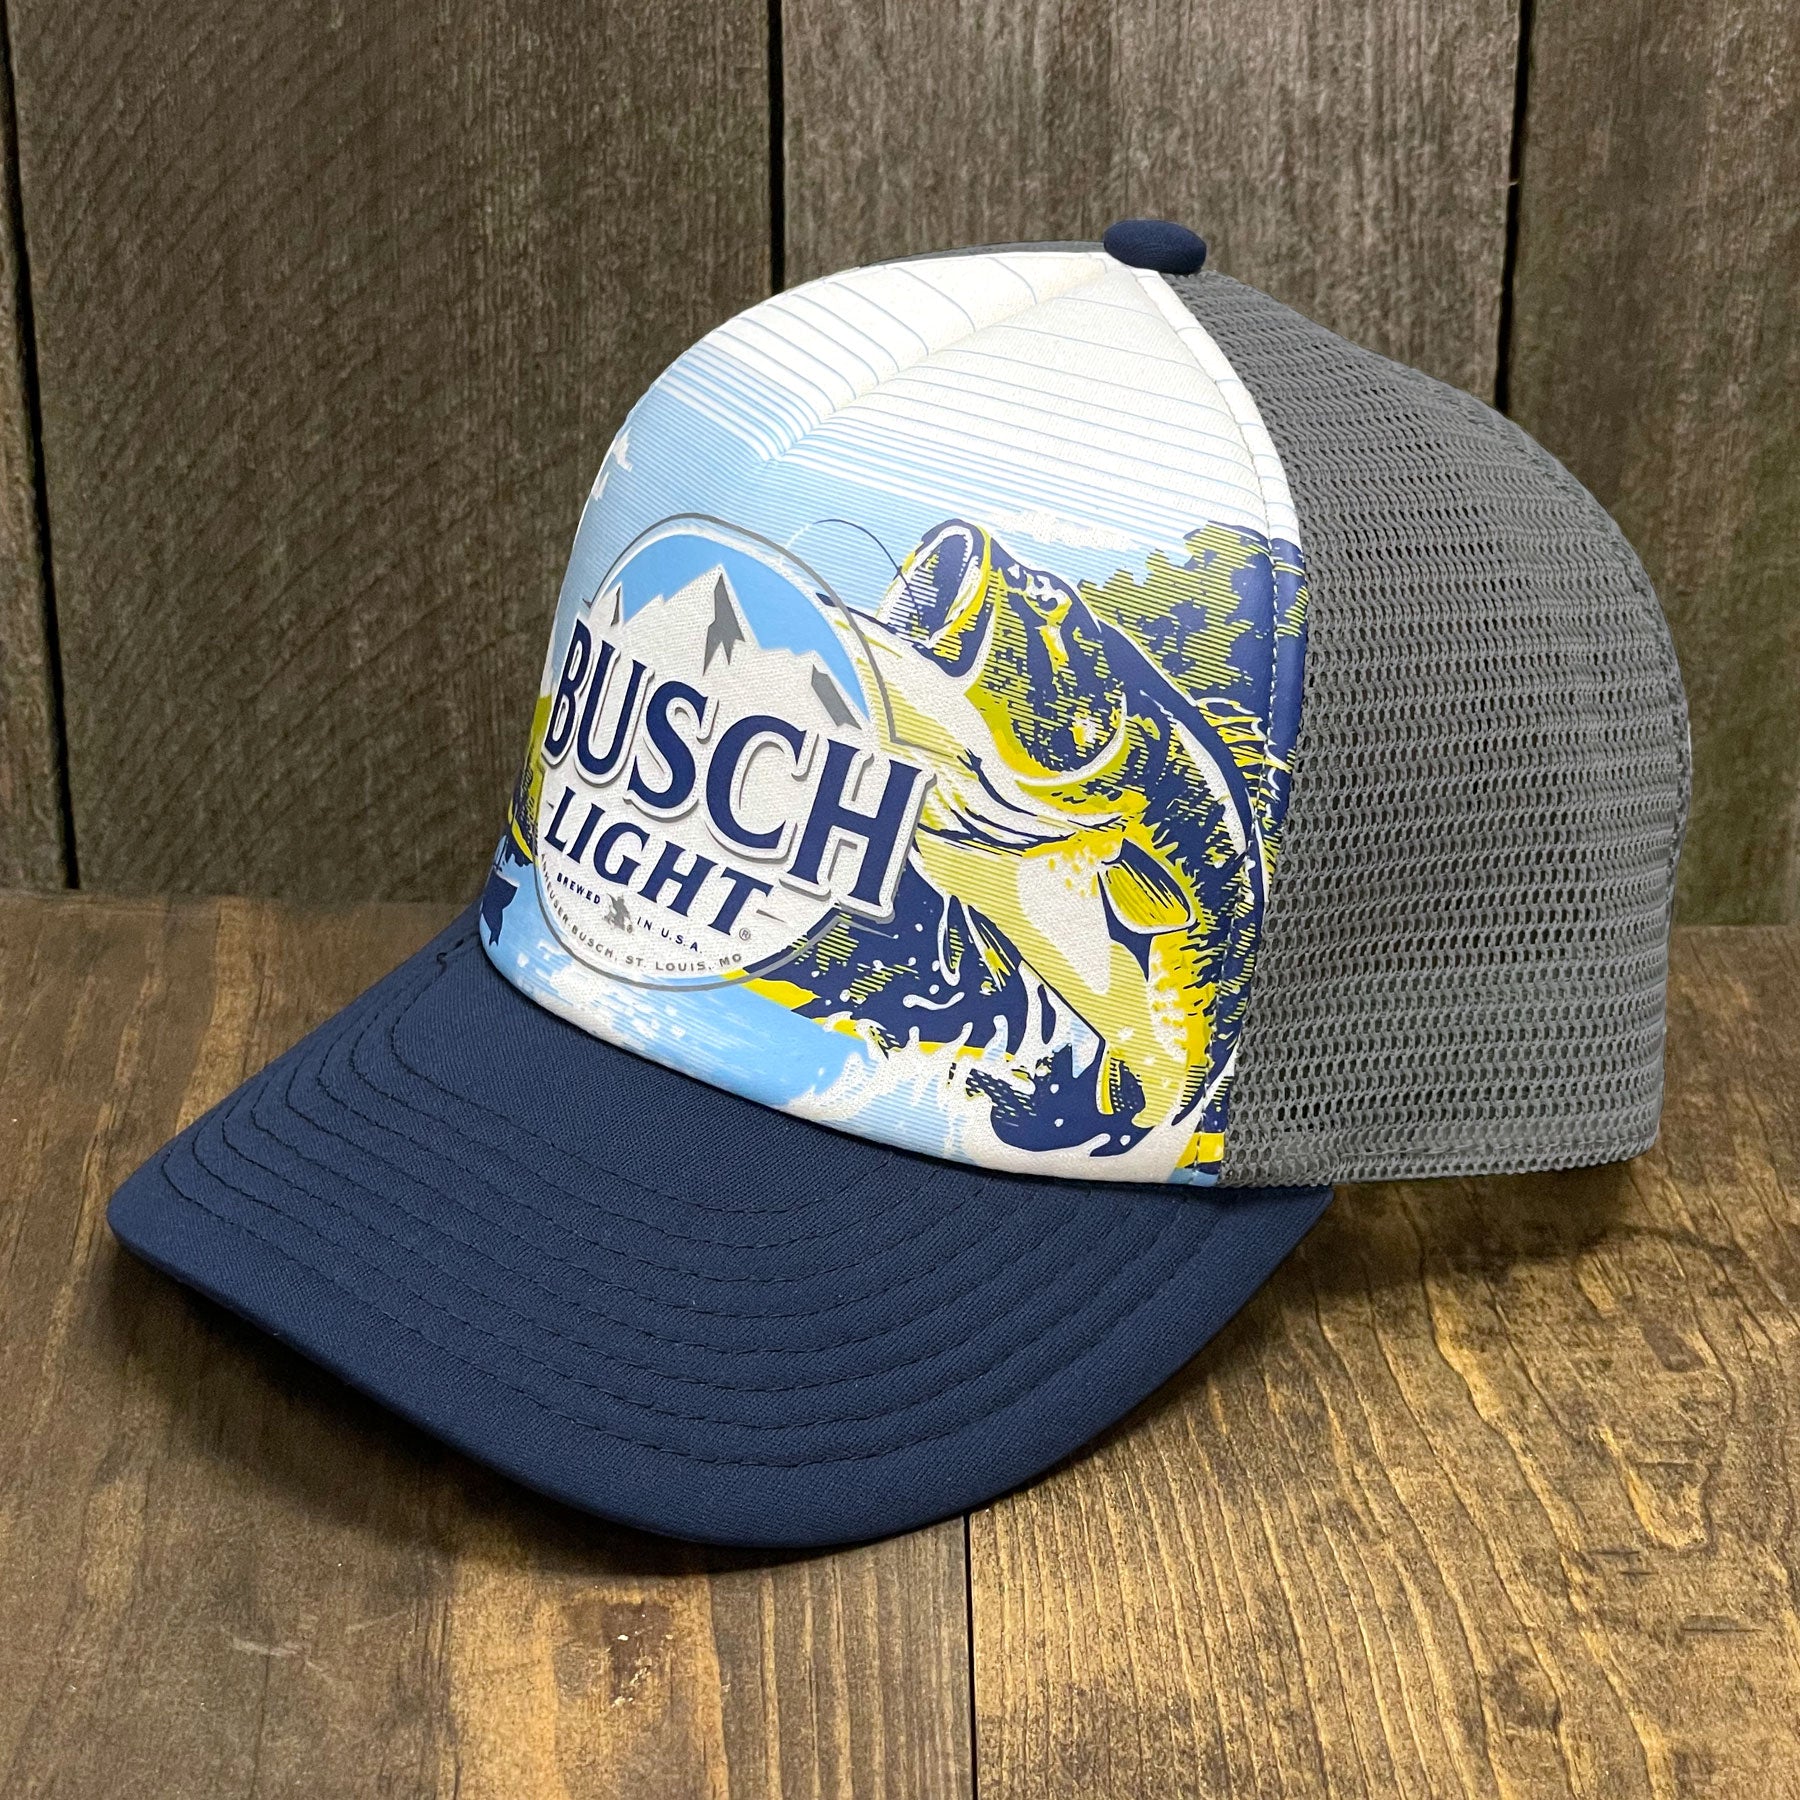 Busch Light Hat - Busch Light Fishing Hat - Foam Trucker Hat